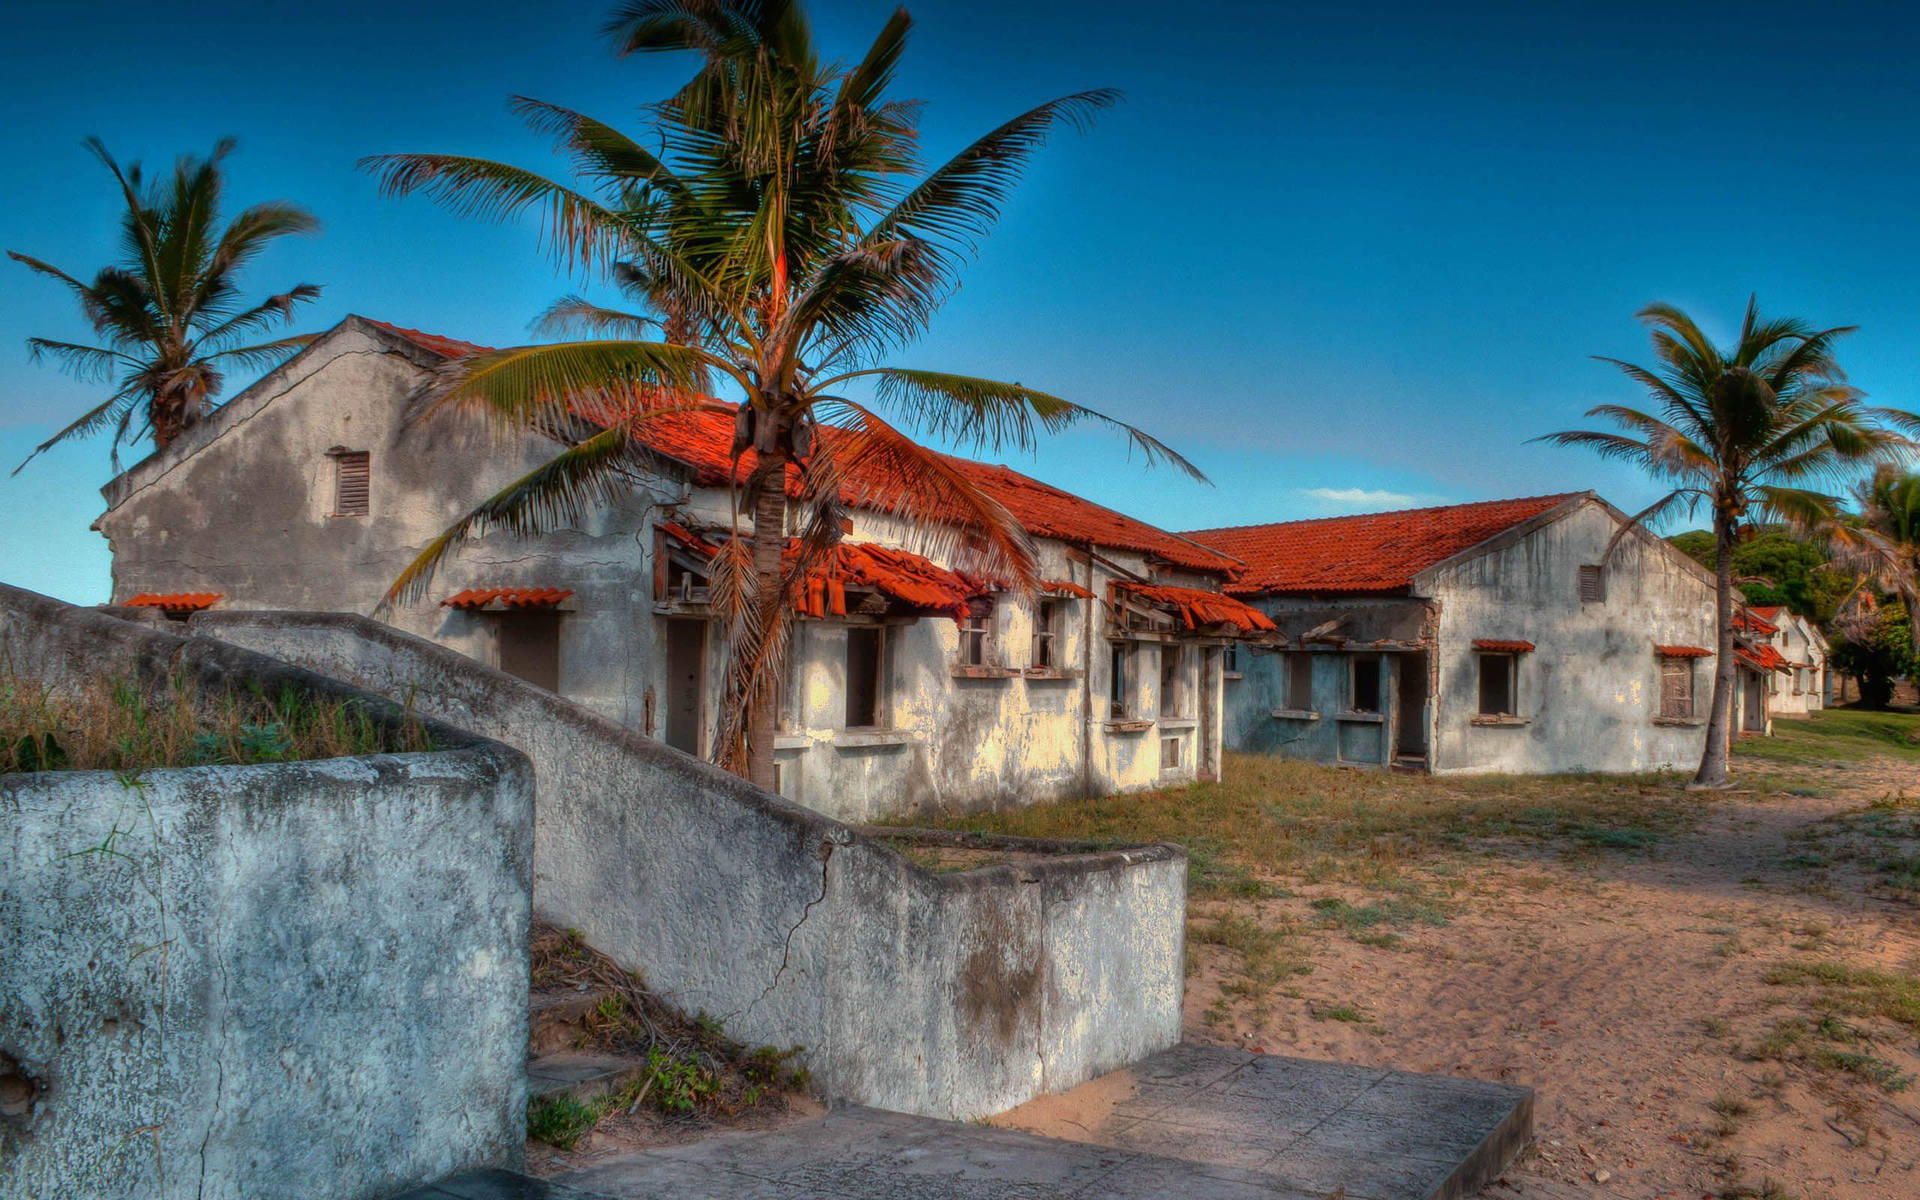 The Shipwreck Lodge Mozambique Background